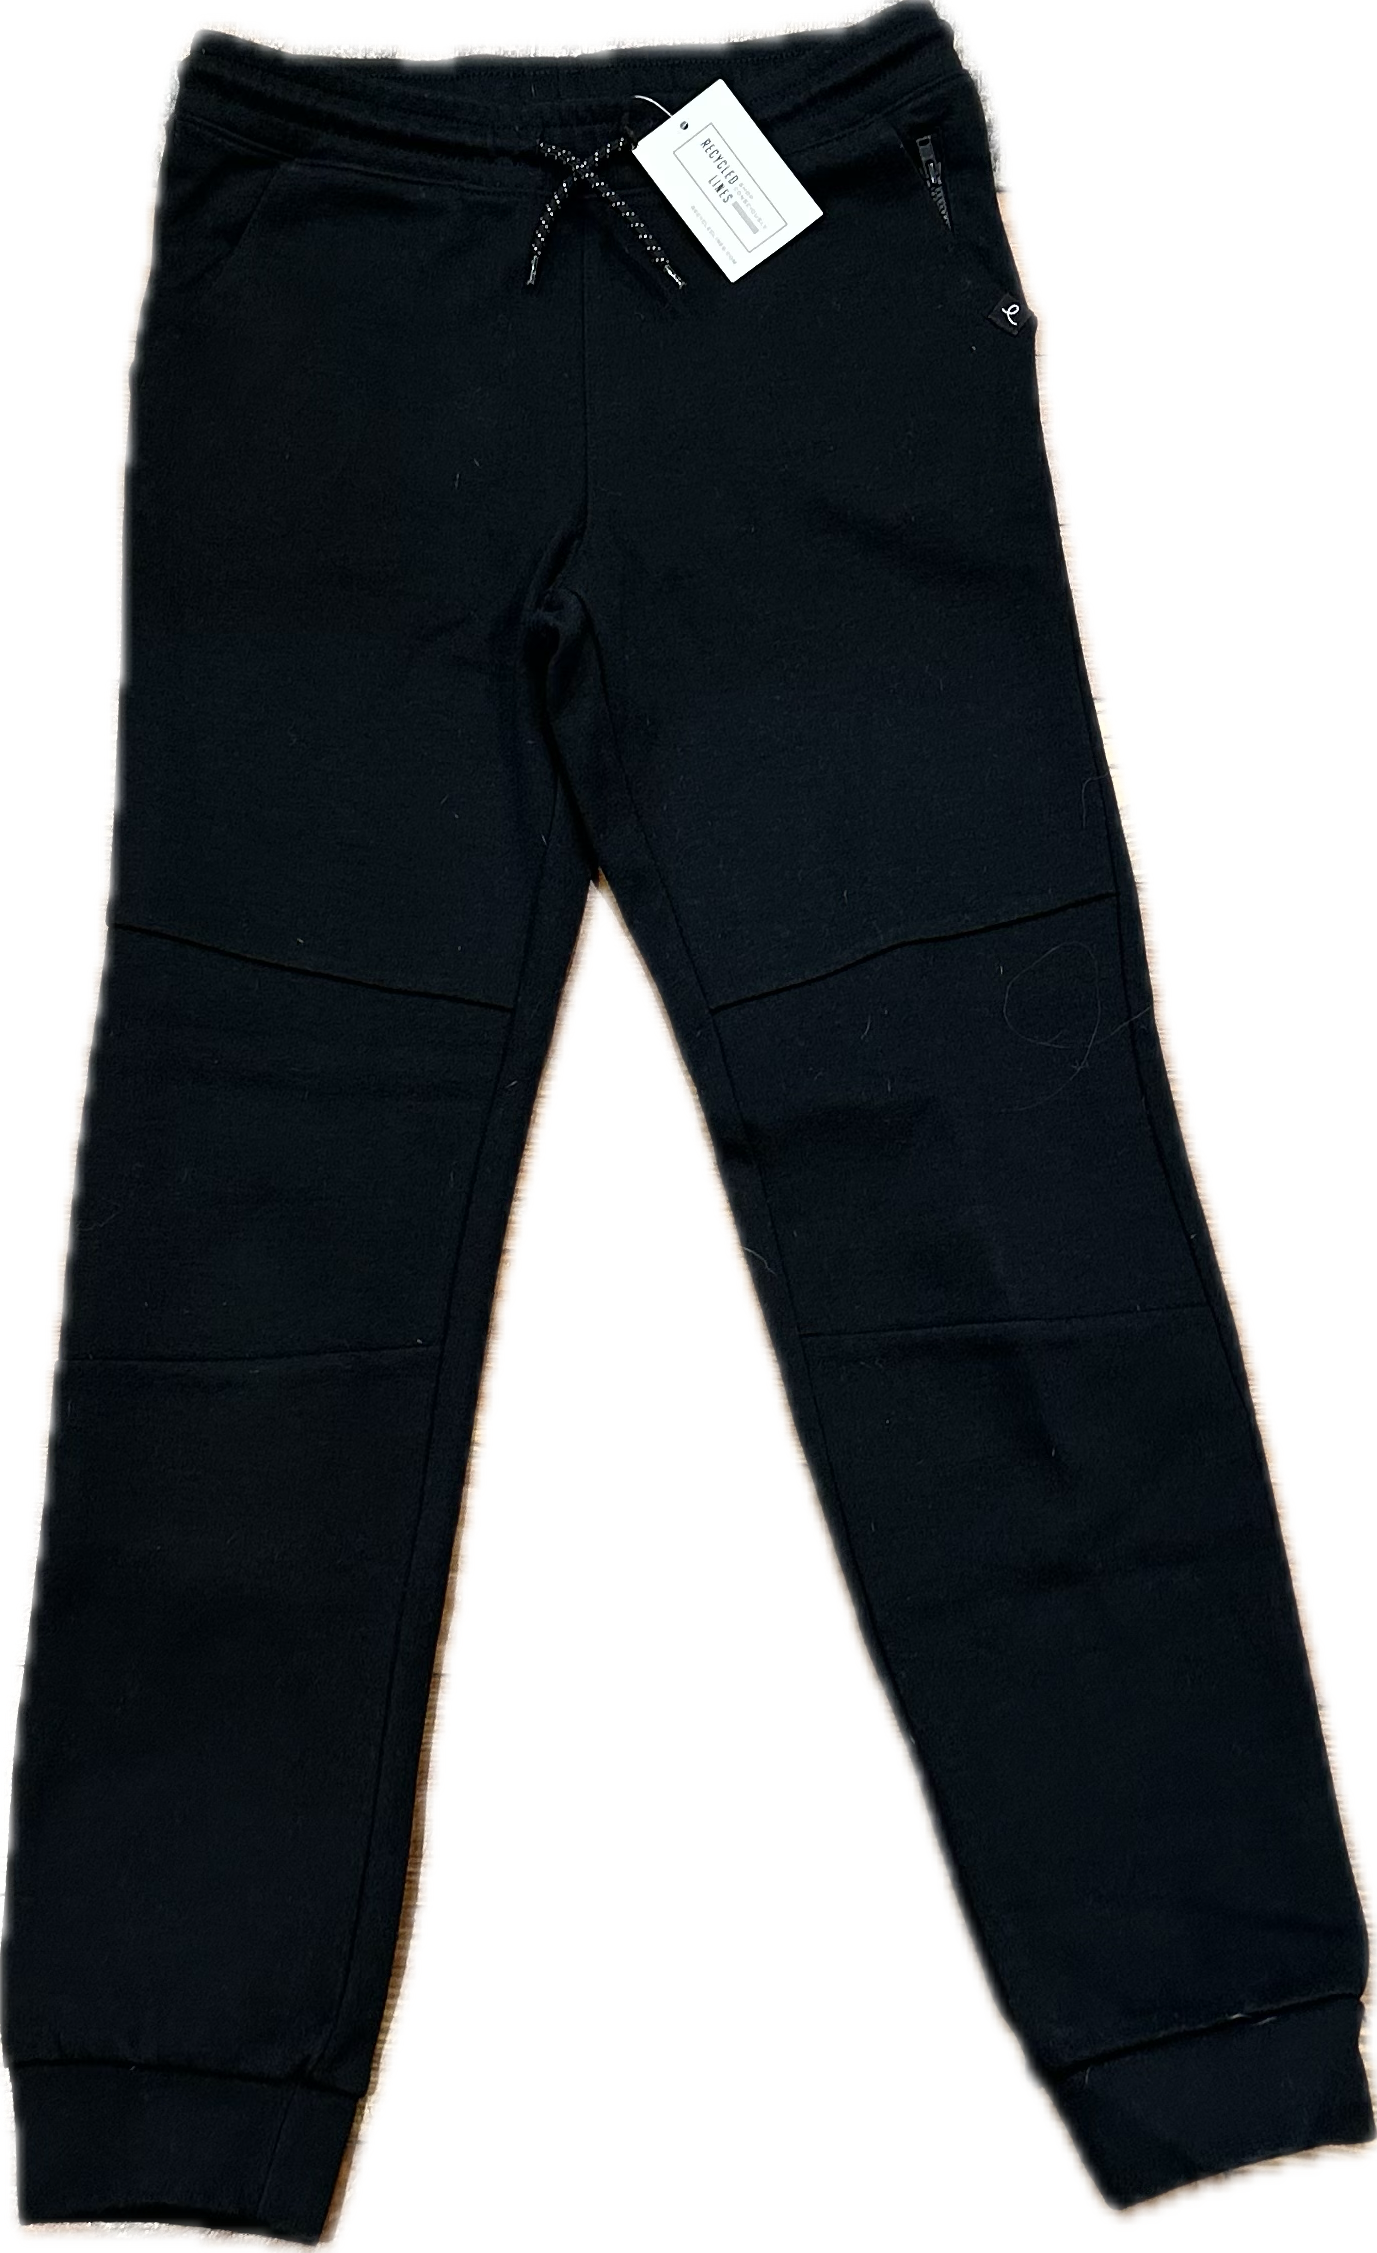 Art Class Sweatpants, Black Boys Size XL (16)